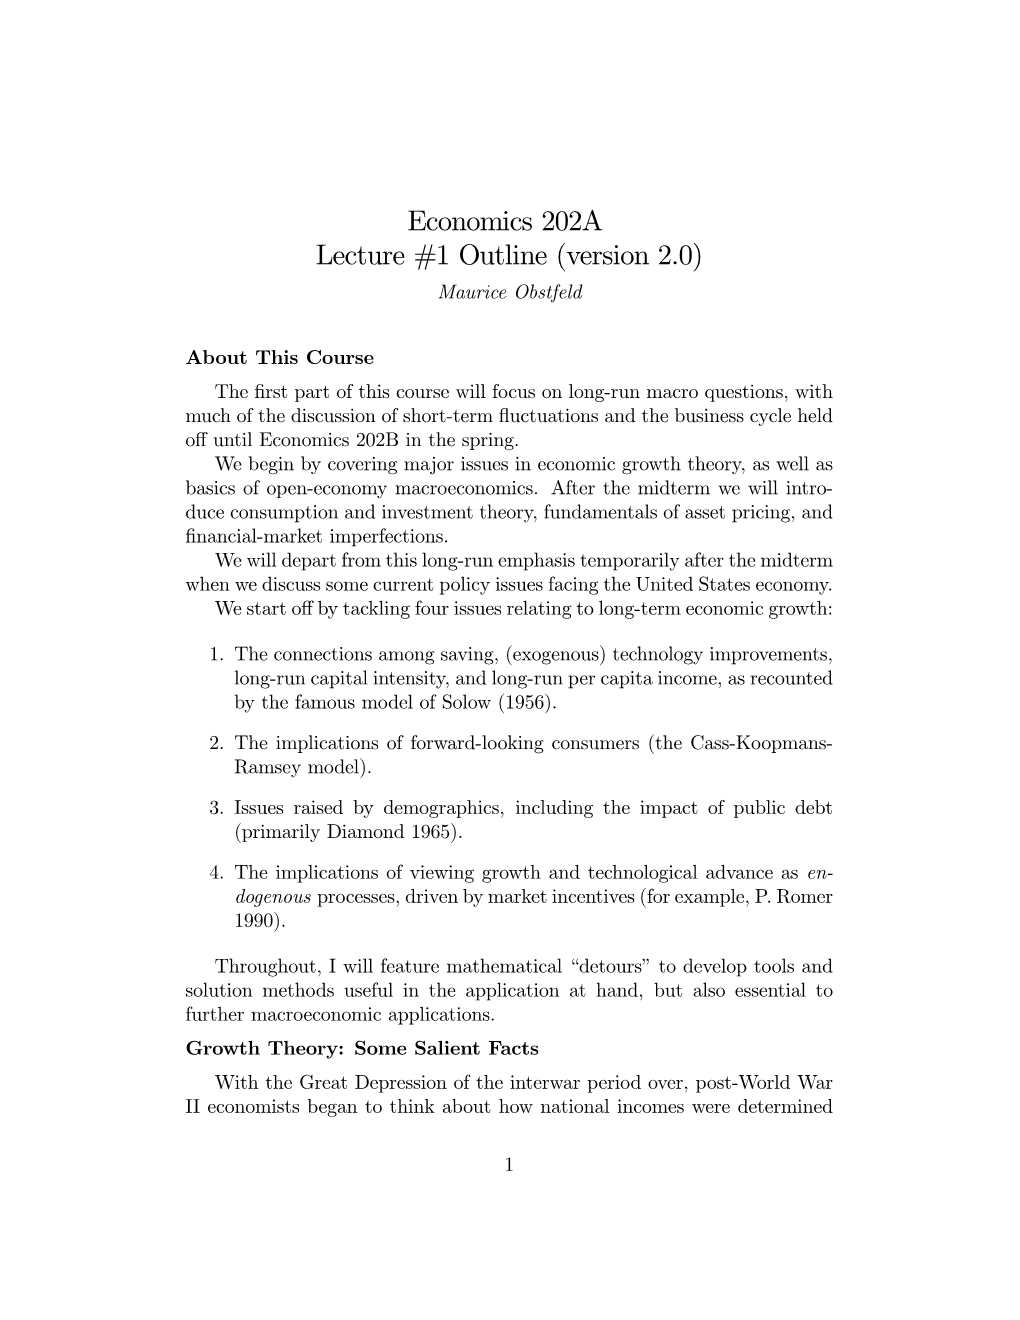 Economics 202A Lecture #1 Outline (Version 2.0) Maurice Obstfeld